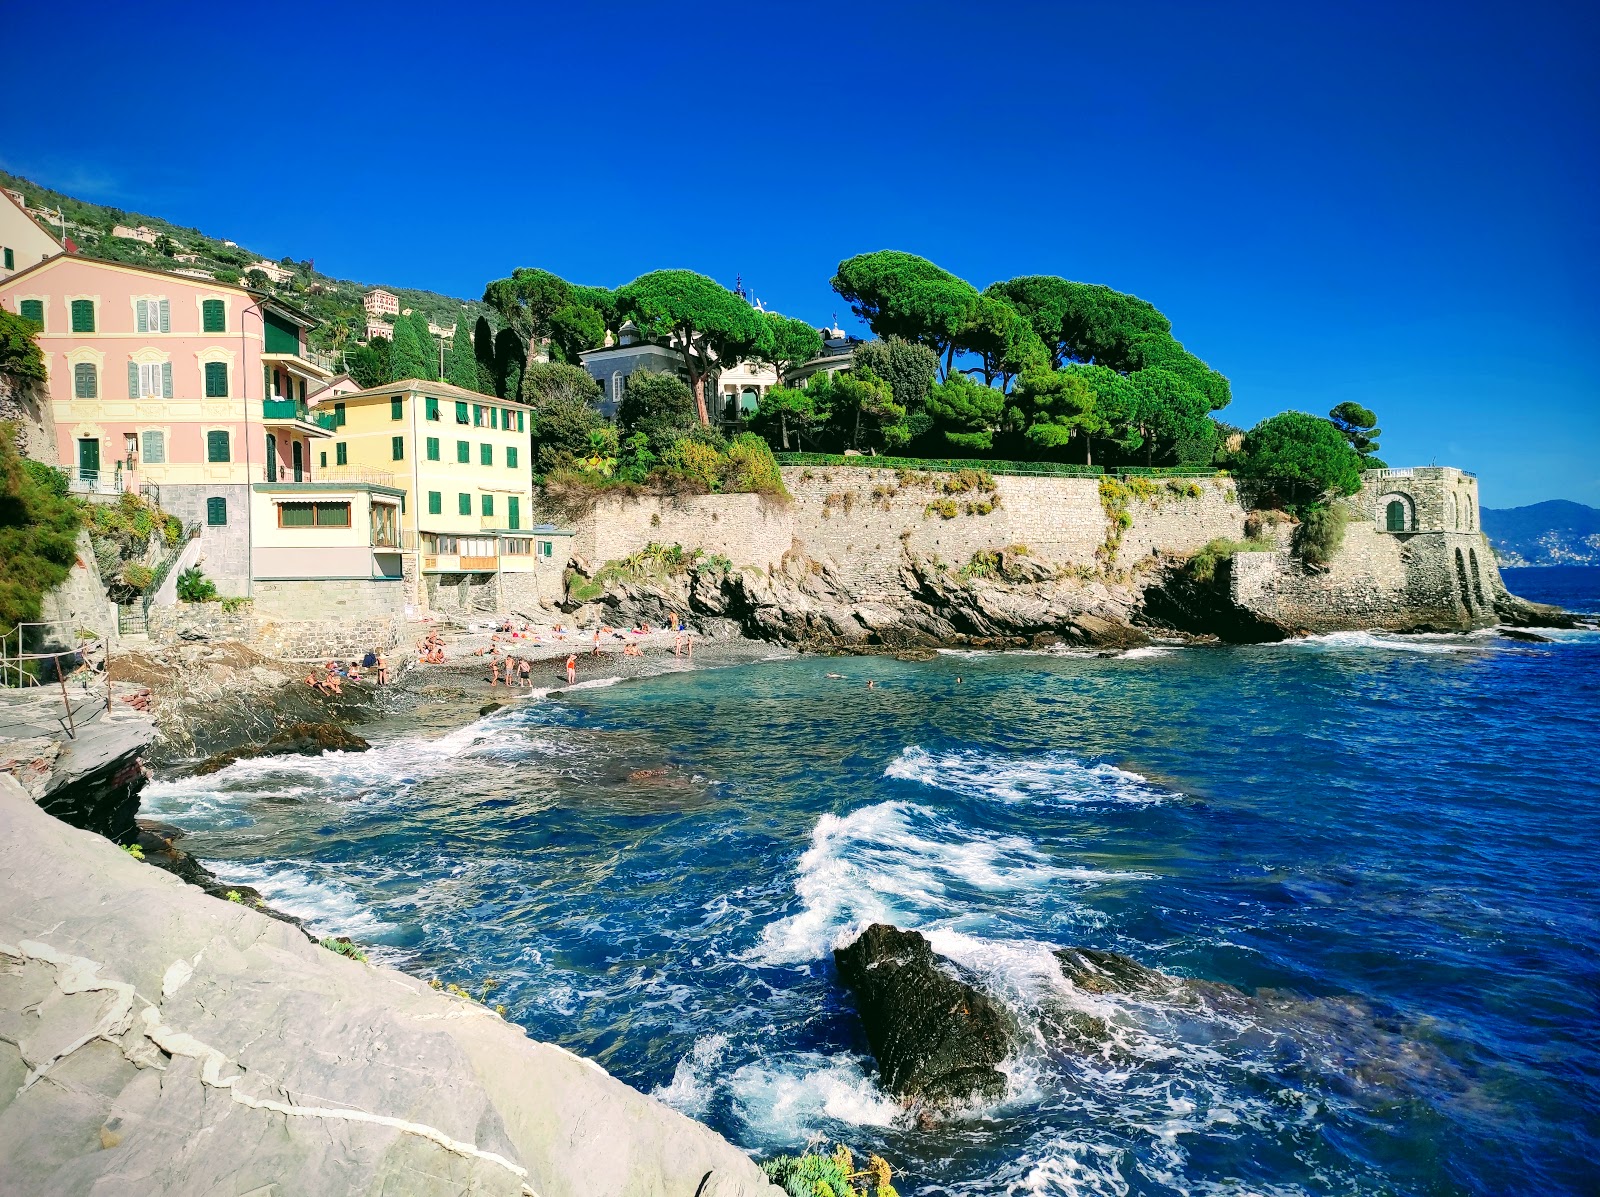 Fotografija Spiaggia Pubblica Capolungo z sivi kamenček površino